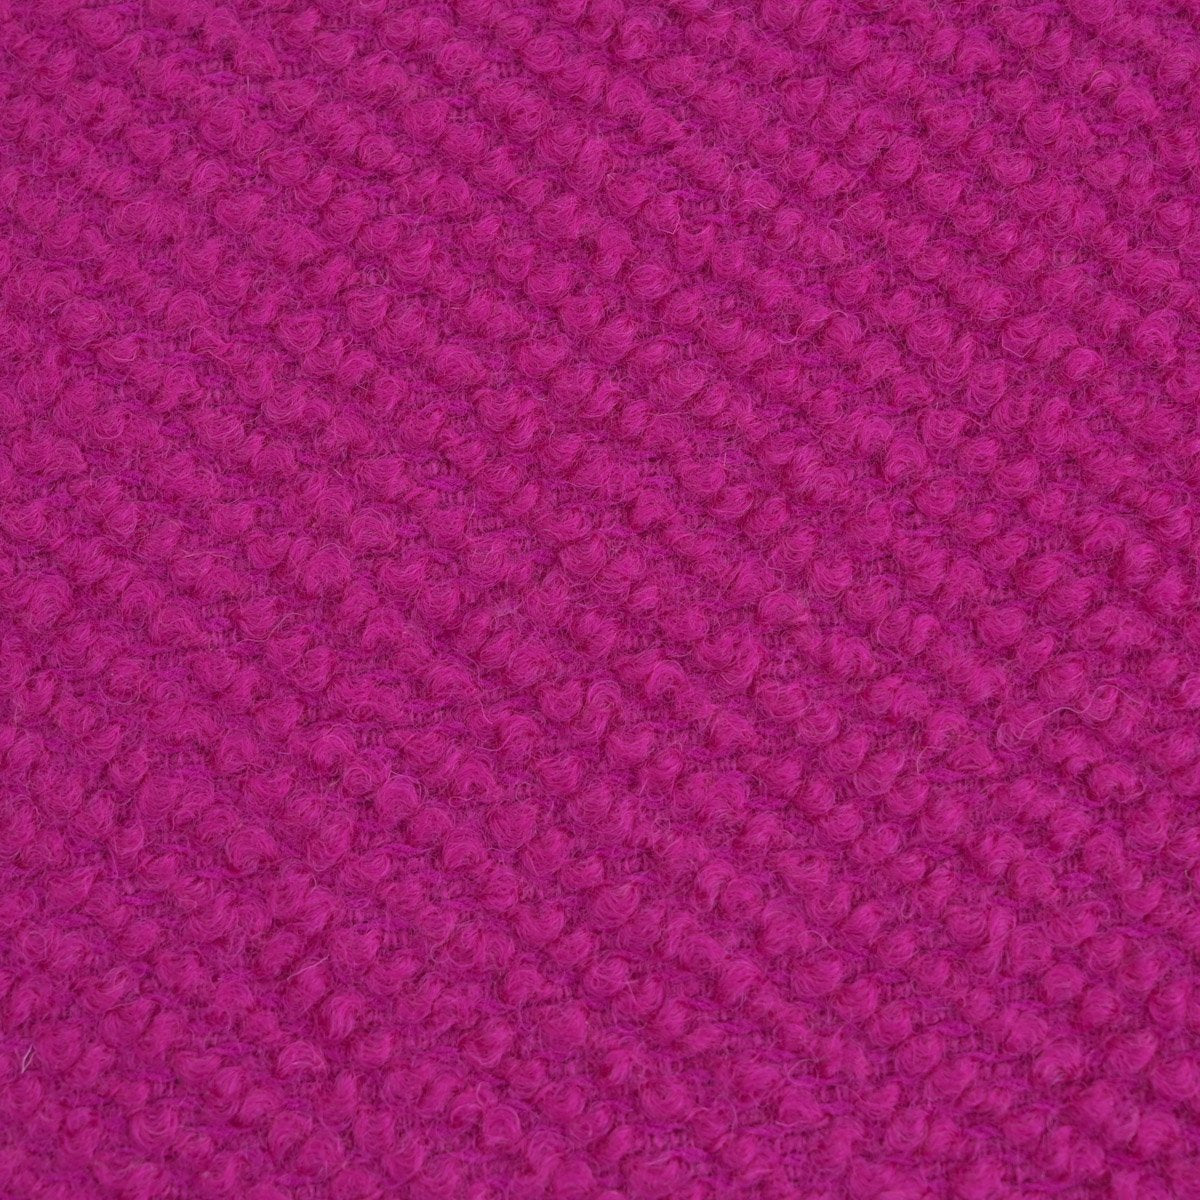 Magenta Coating Fabric 5658